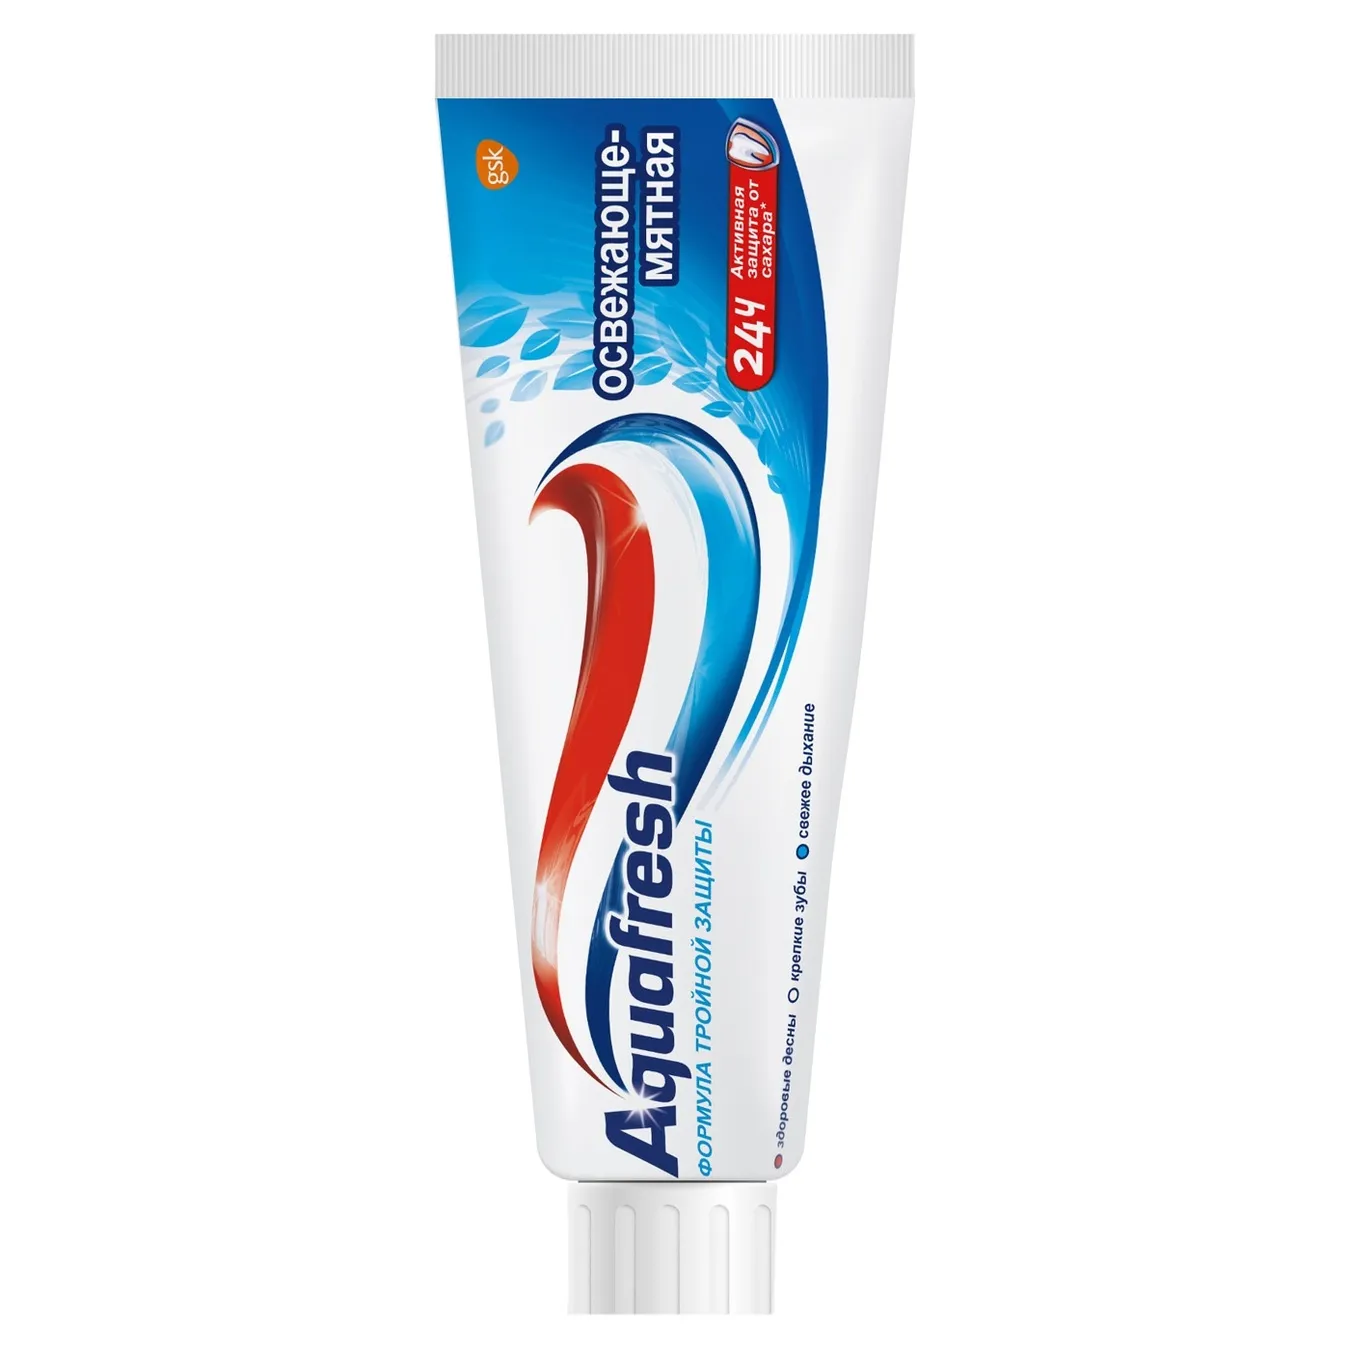 Aquafresh Family Toothpaste 100ml